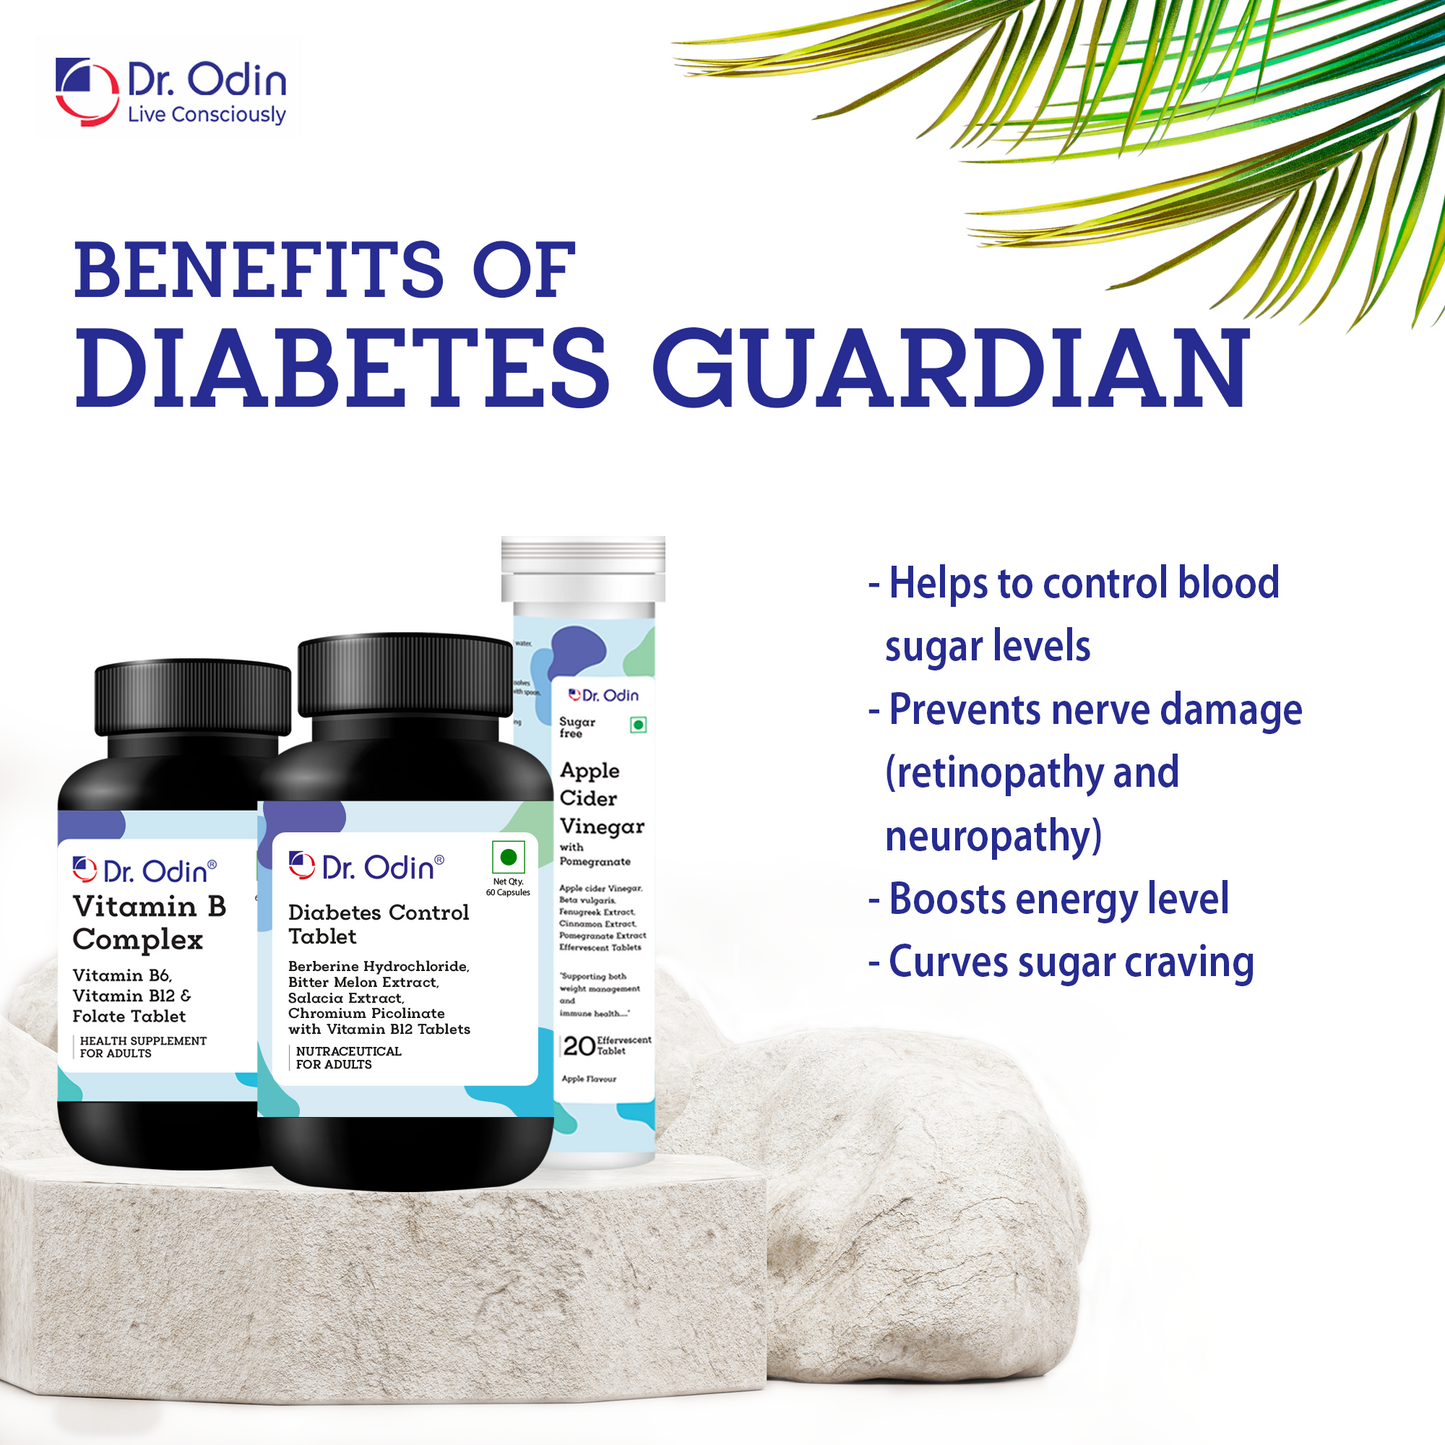 Diabetes Guardian